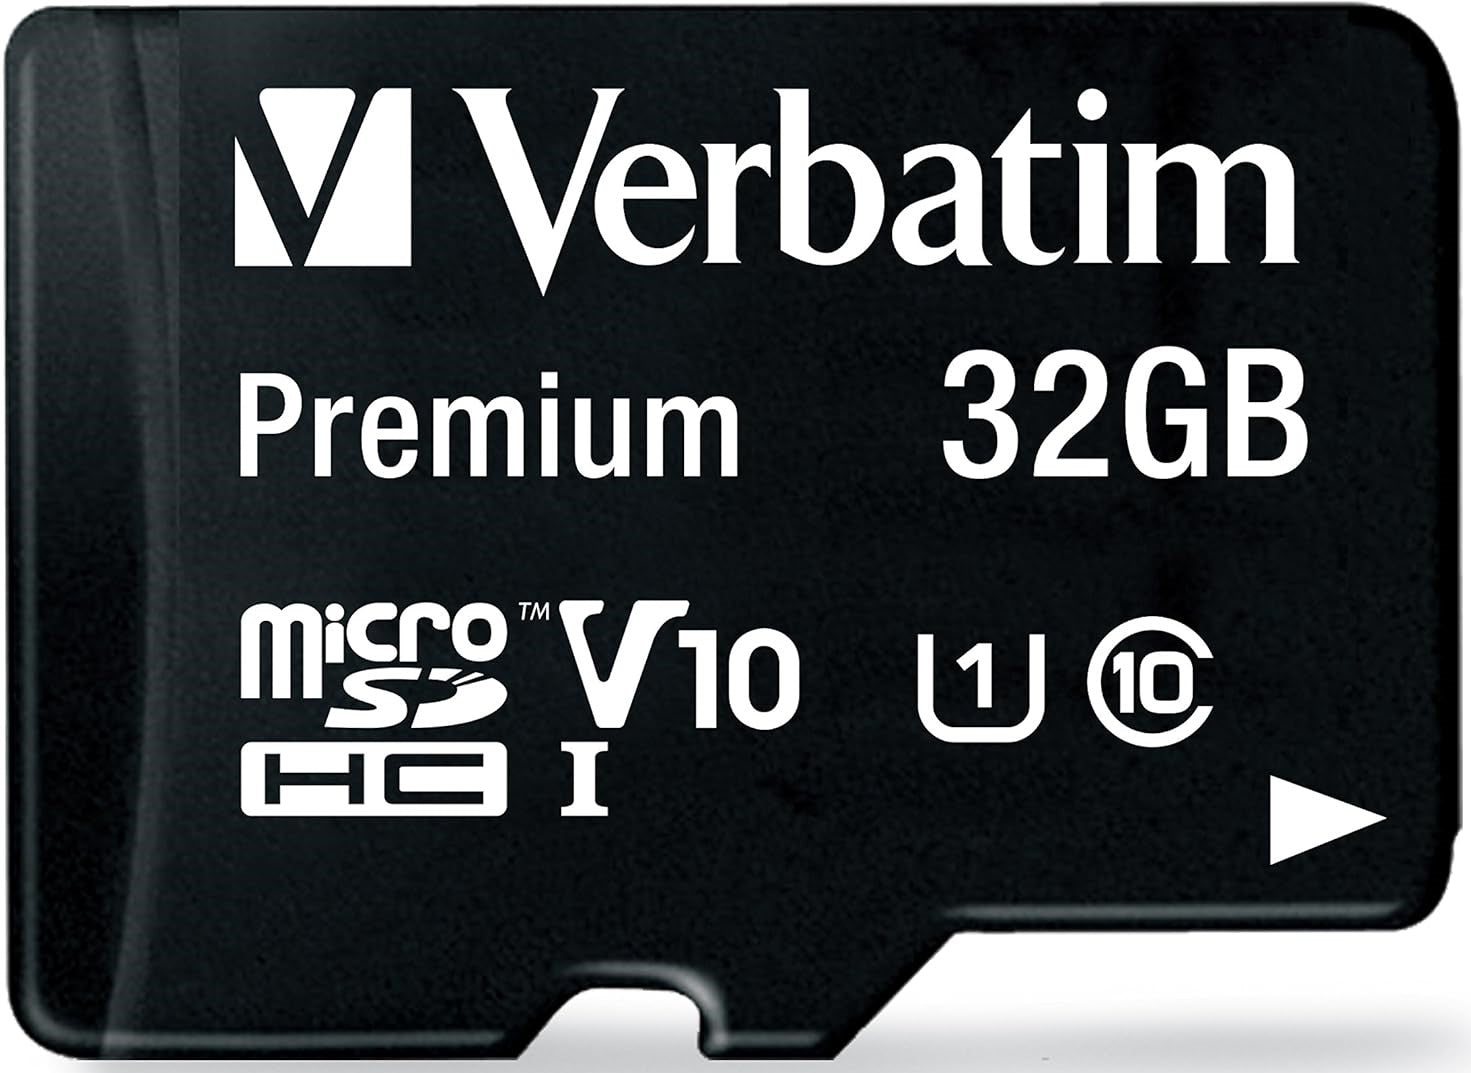 Verbatim Premium microSDHC Class 10 UHS-I Card 32GB with Adapter